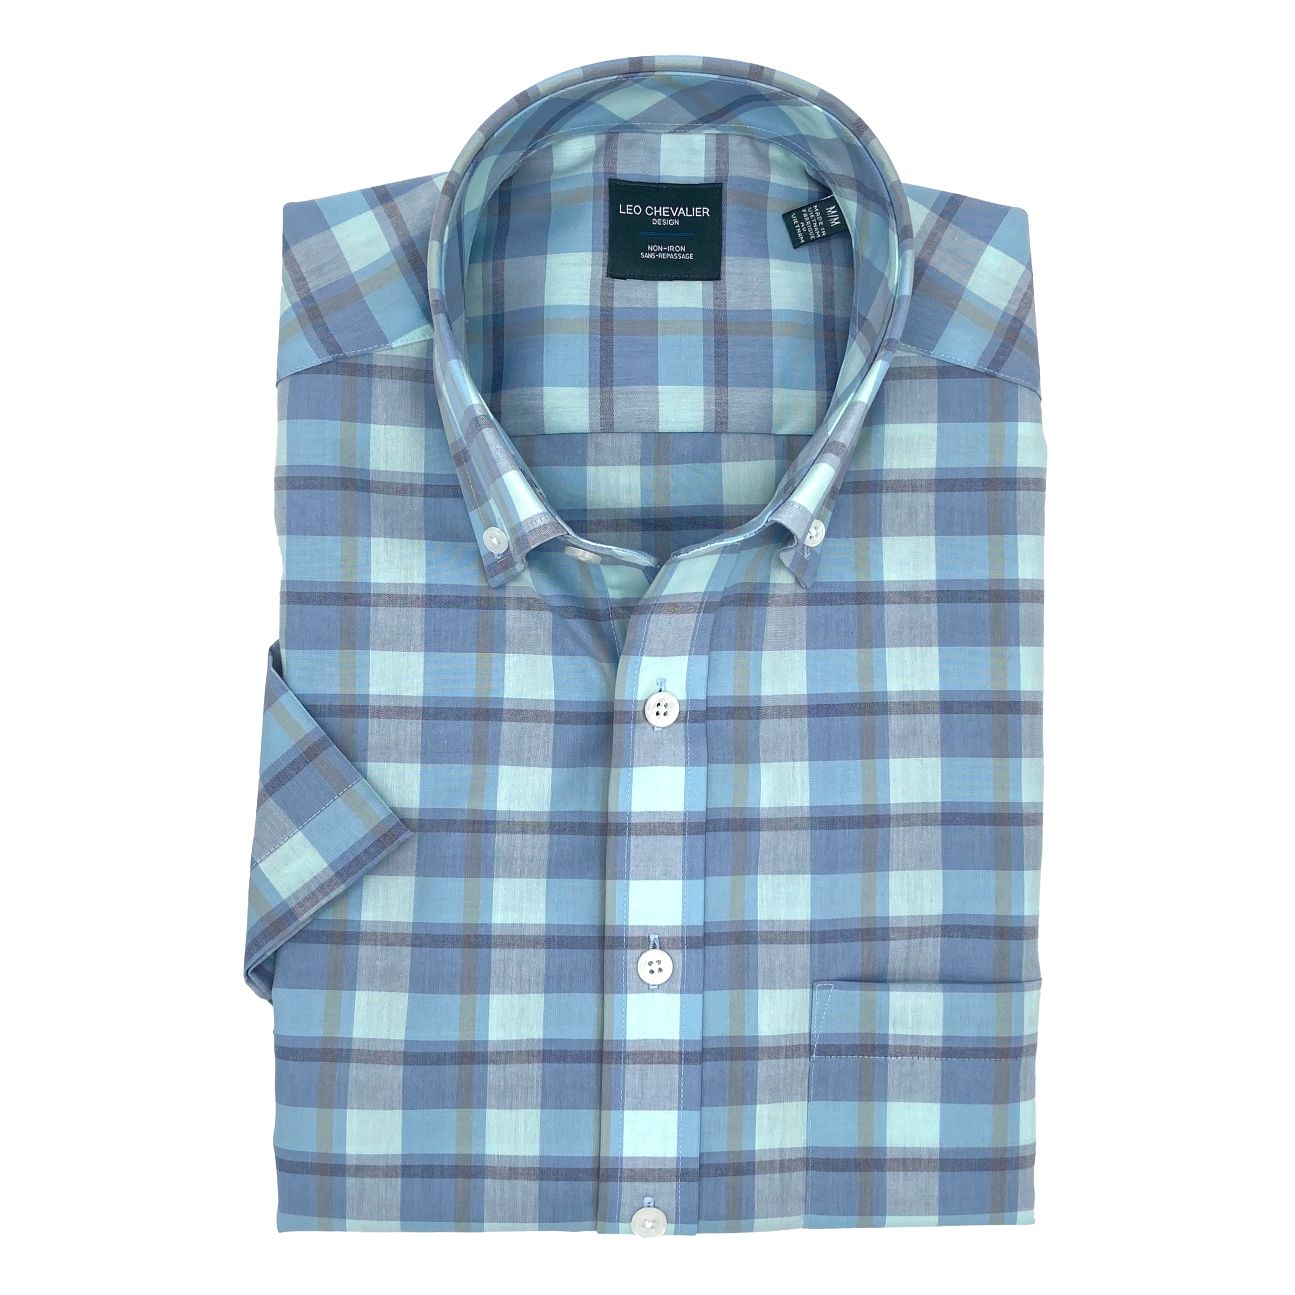 Aqua Multi Plaid Short Sleeve No-Iron Cotton Sport Shirt with Button Down Collar by Leo Chevalier